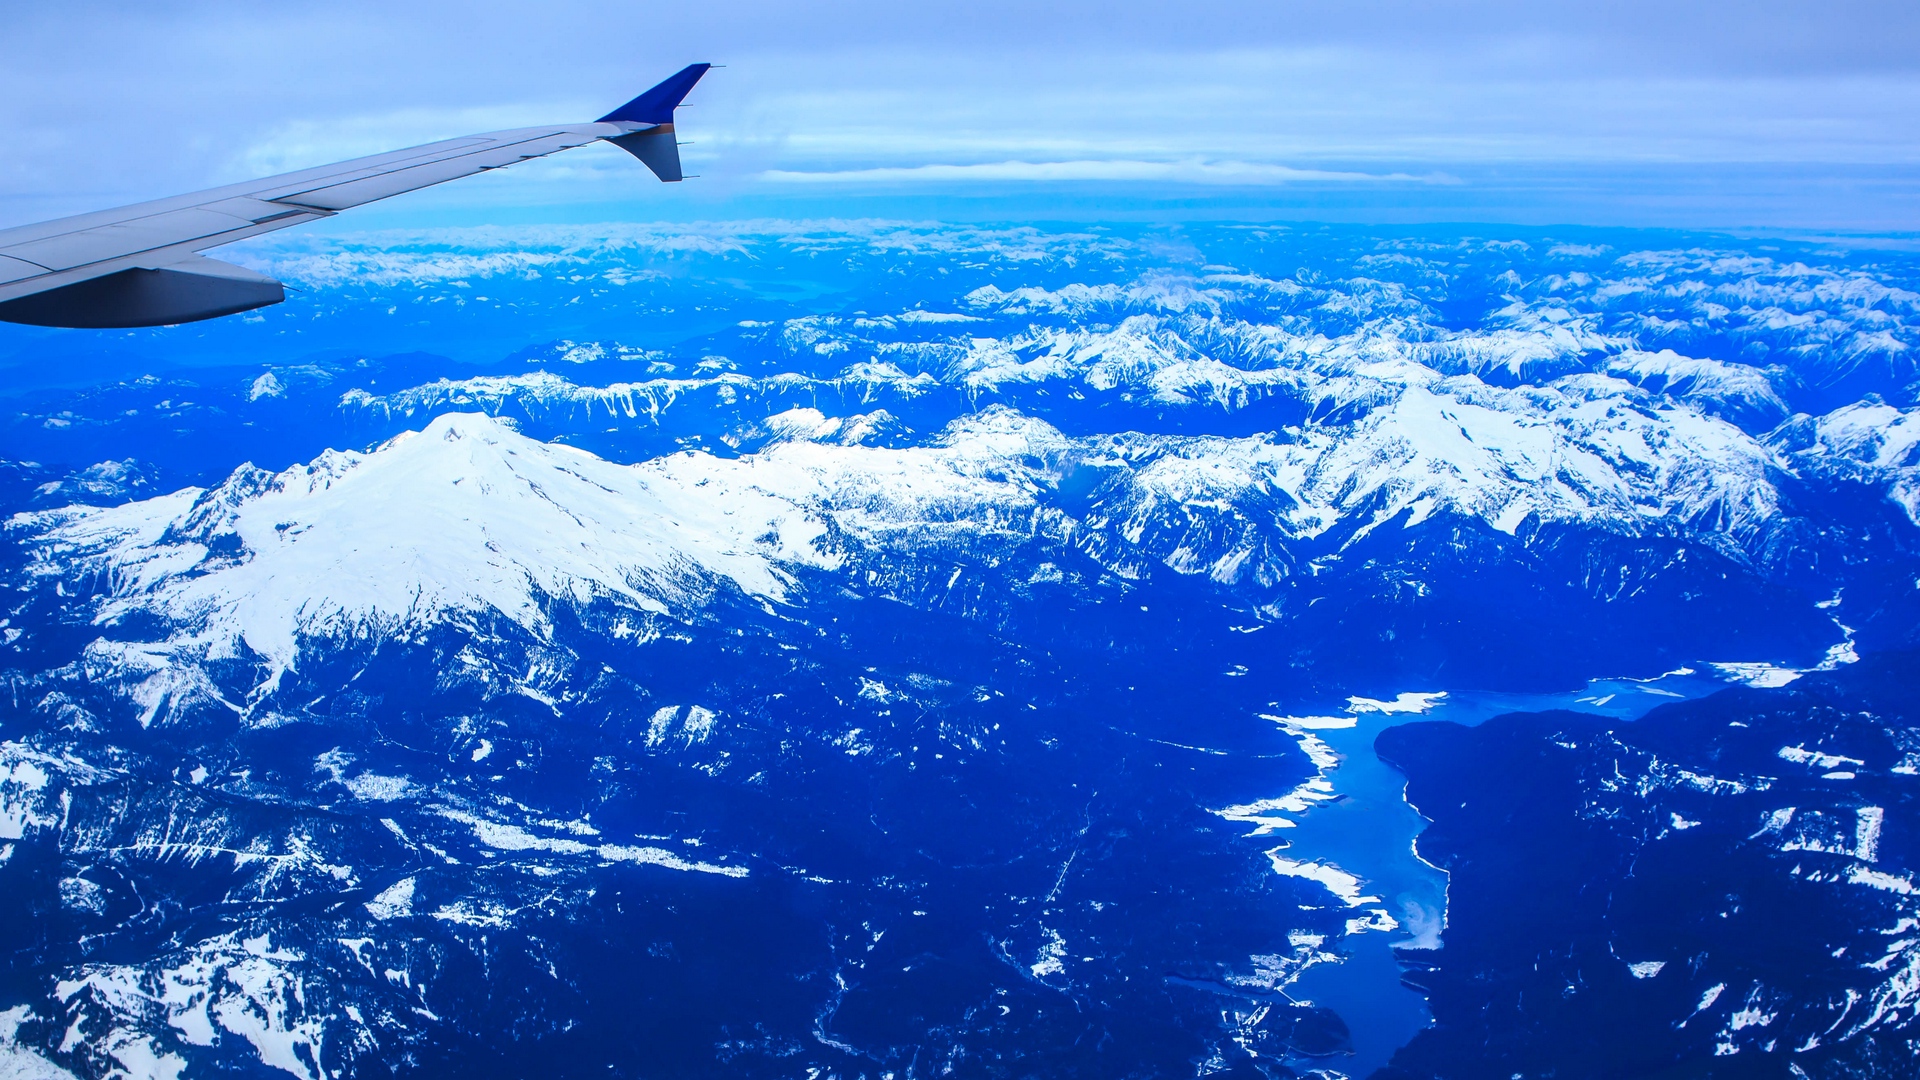 General 1920x1080 airplane airplane wing mountains peak Washington USA blue snowy peak aircraft landscape vehicle